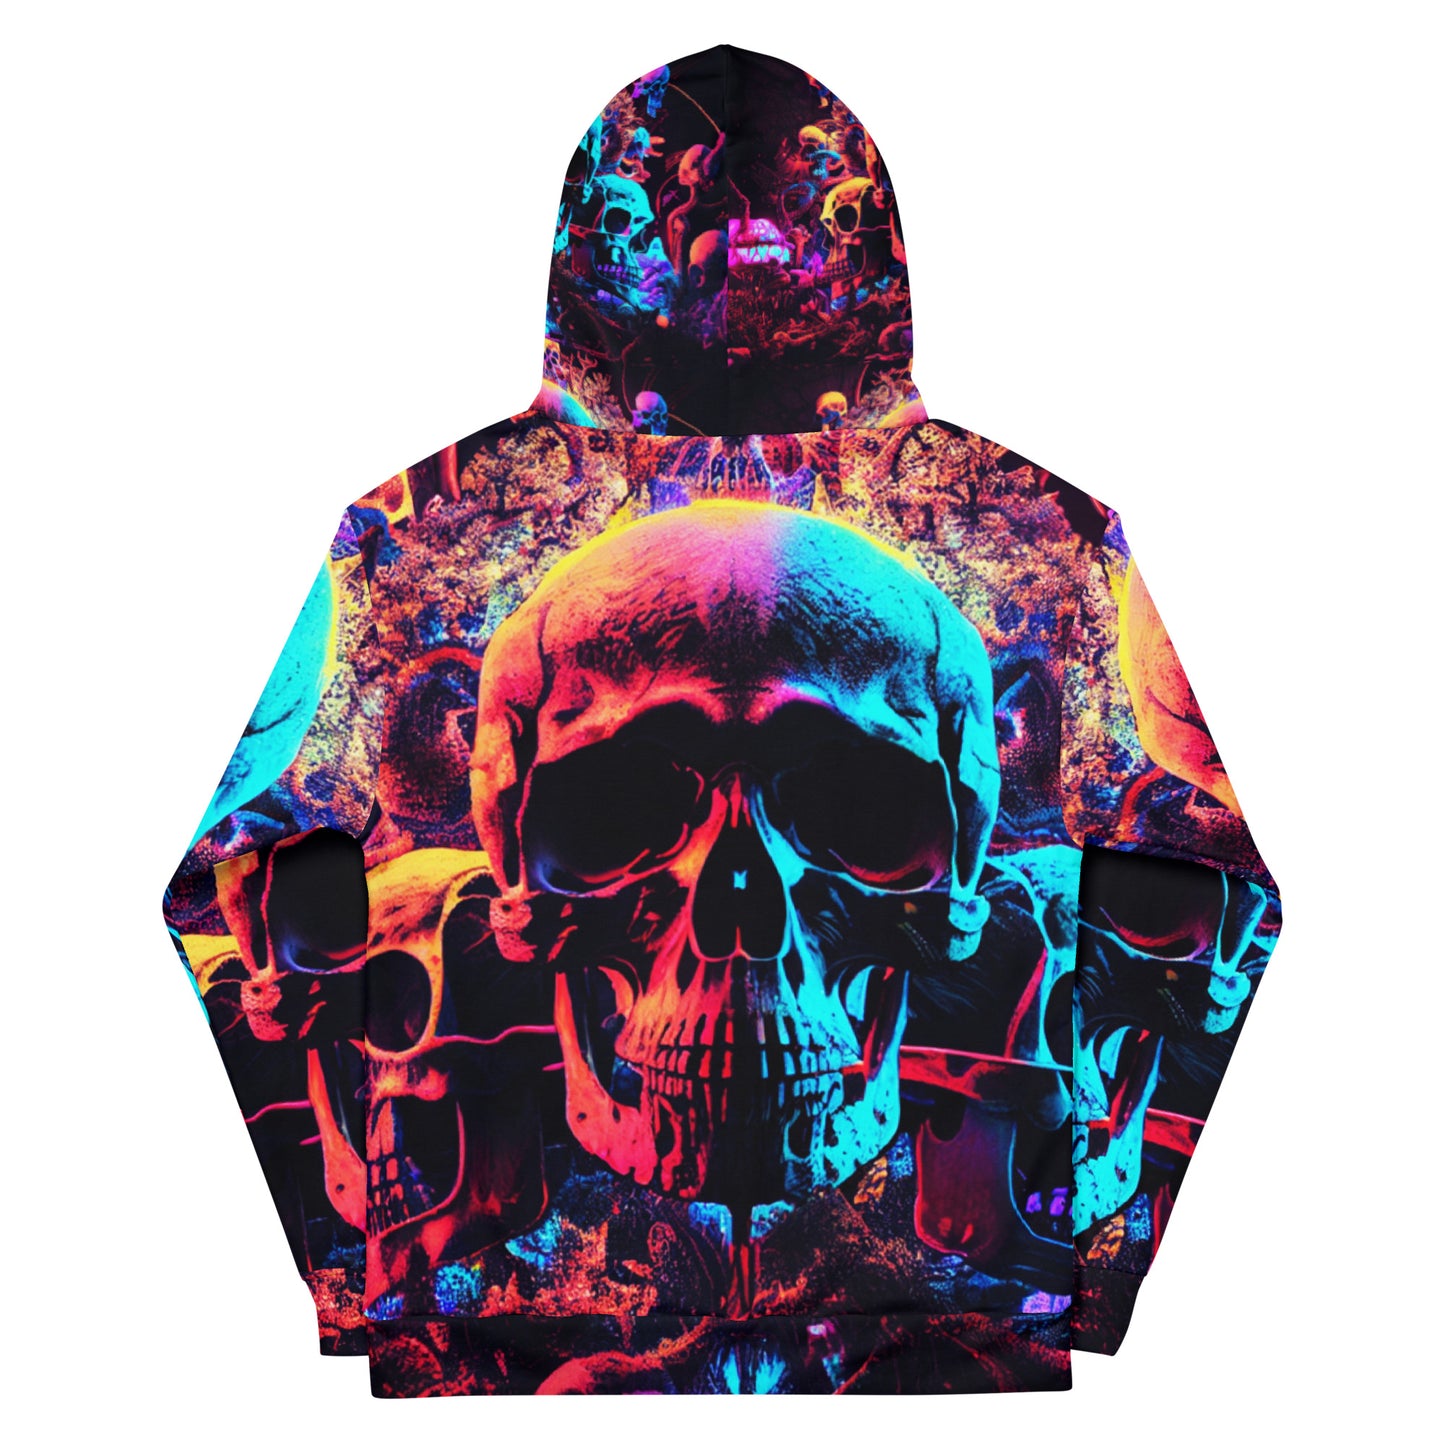 Acid Skulls 04 Unisex Hoodie Djungle Fever - Club Wear / Skate Wear / Rave Wear